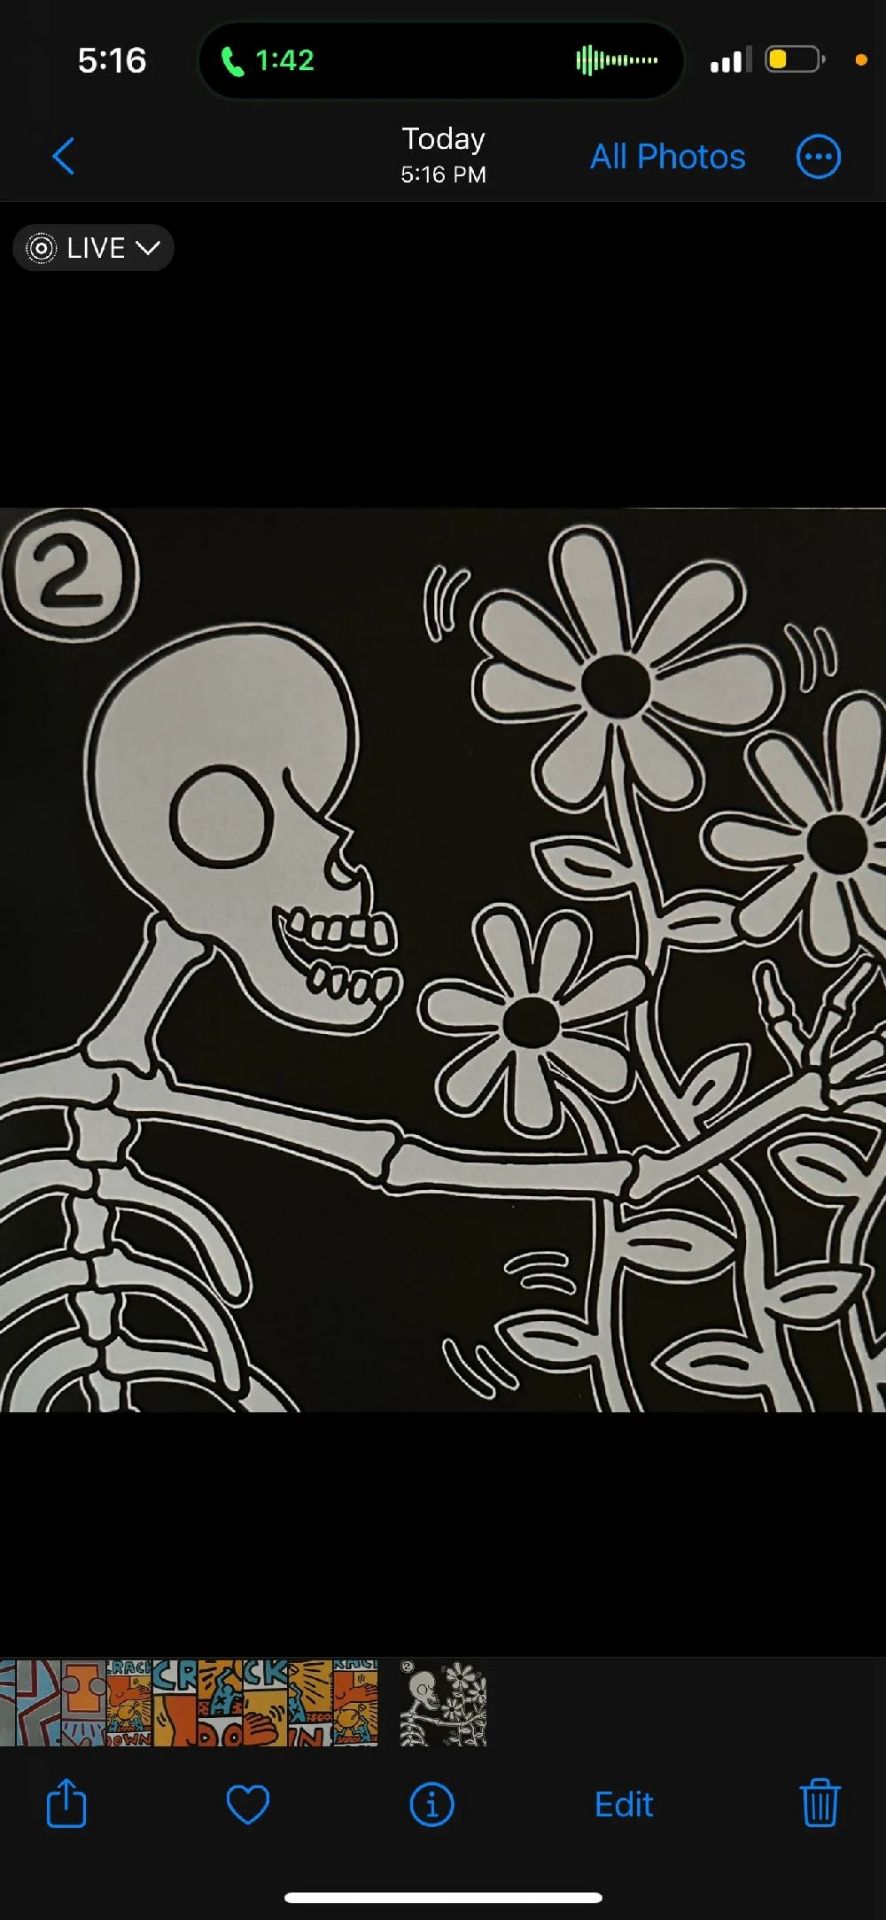 Keith Haring "Untitled" Print. - Bild 5 aus 6